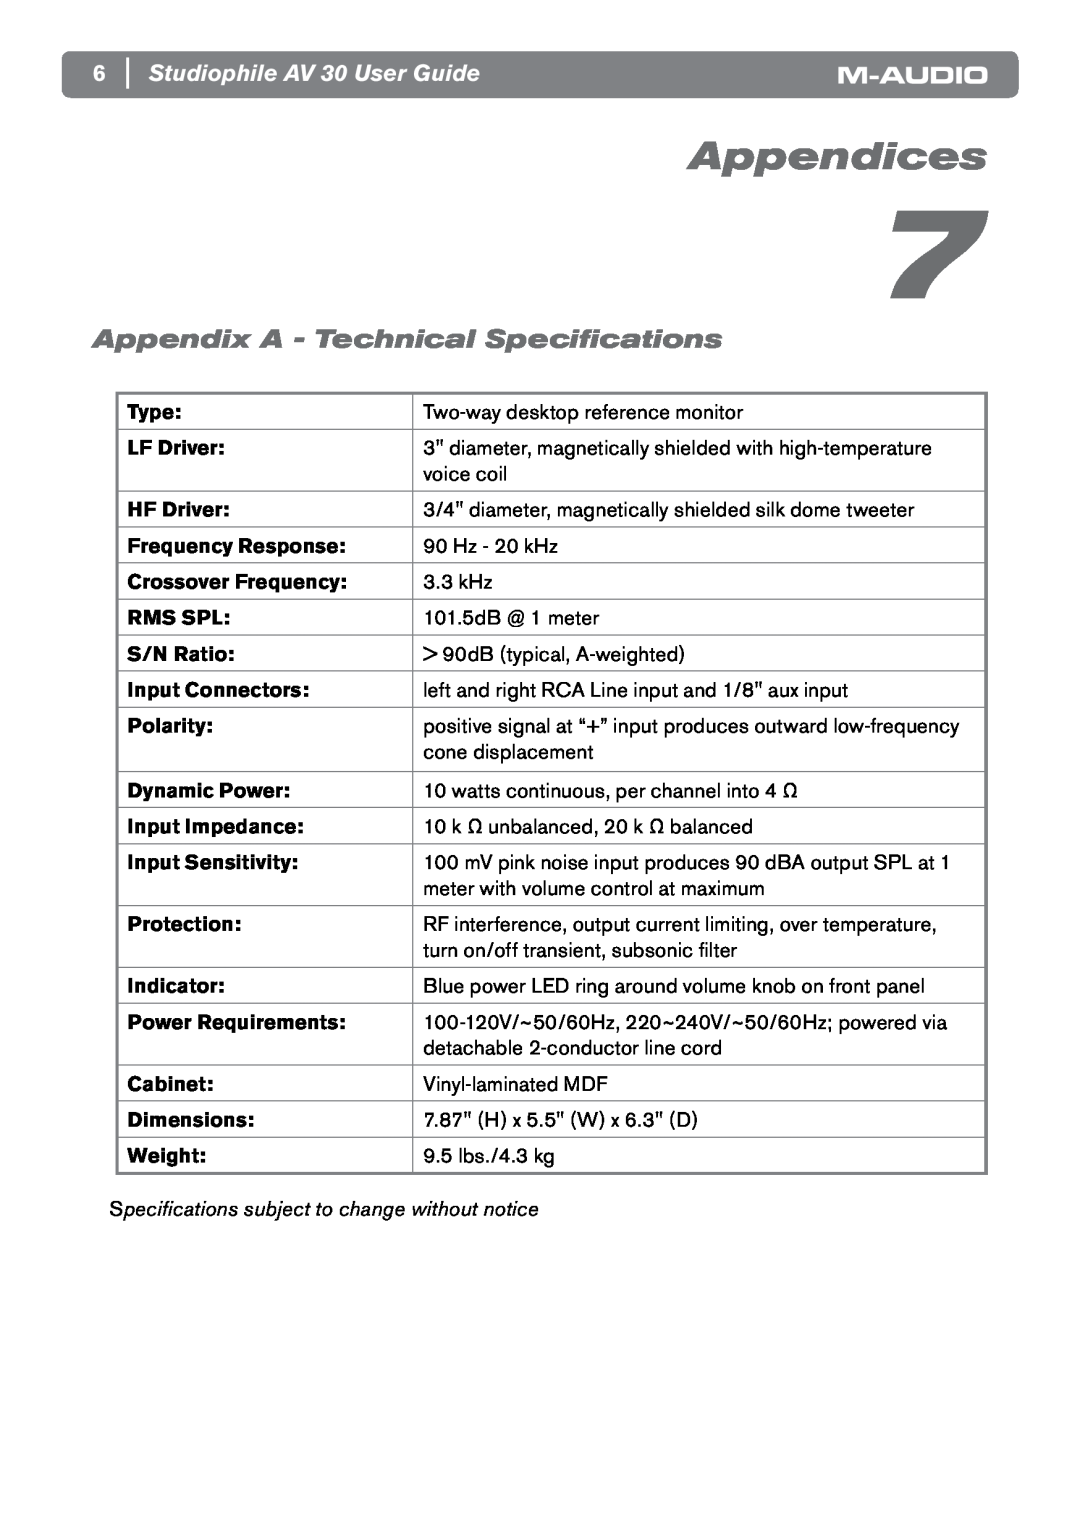 M-Audio manual Appendices, Appendix A - Technical Specifications, Studiophile AV 30 User Guide 